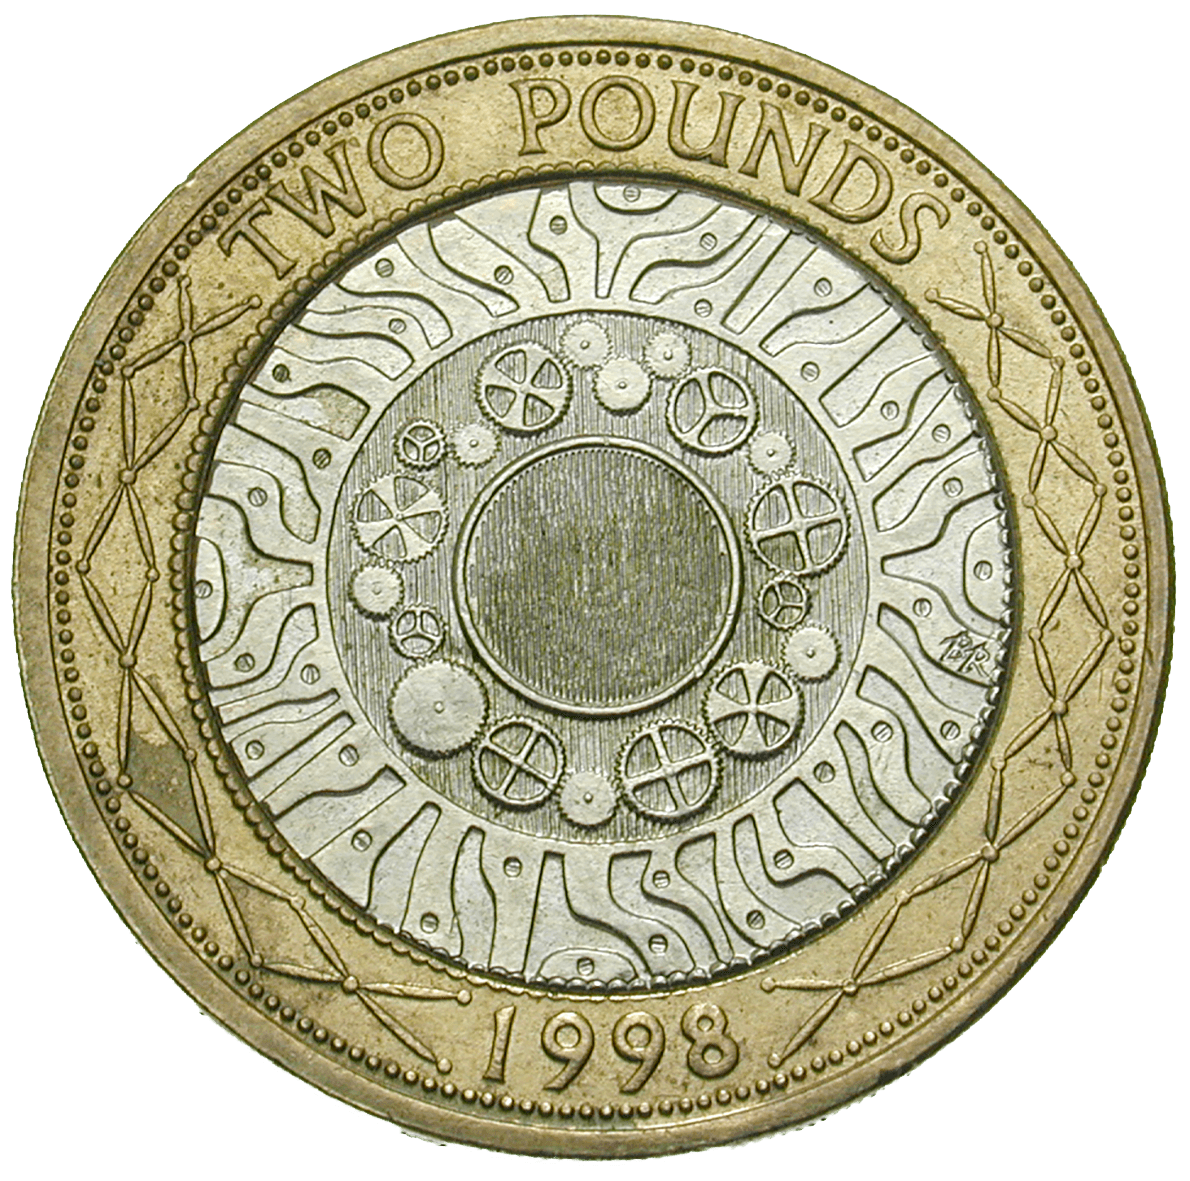 United Kingdom of Great Britain, Elizabeth II, 2 Pounds 1998 (reverse)